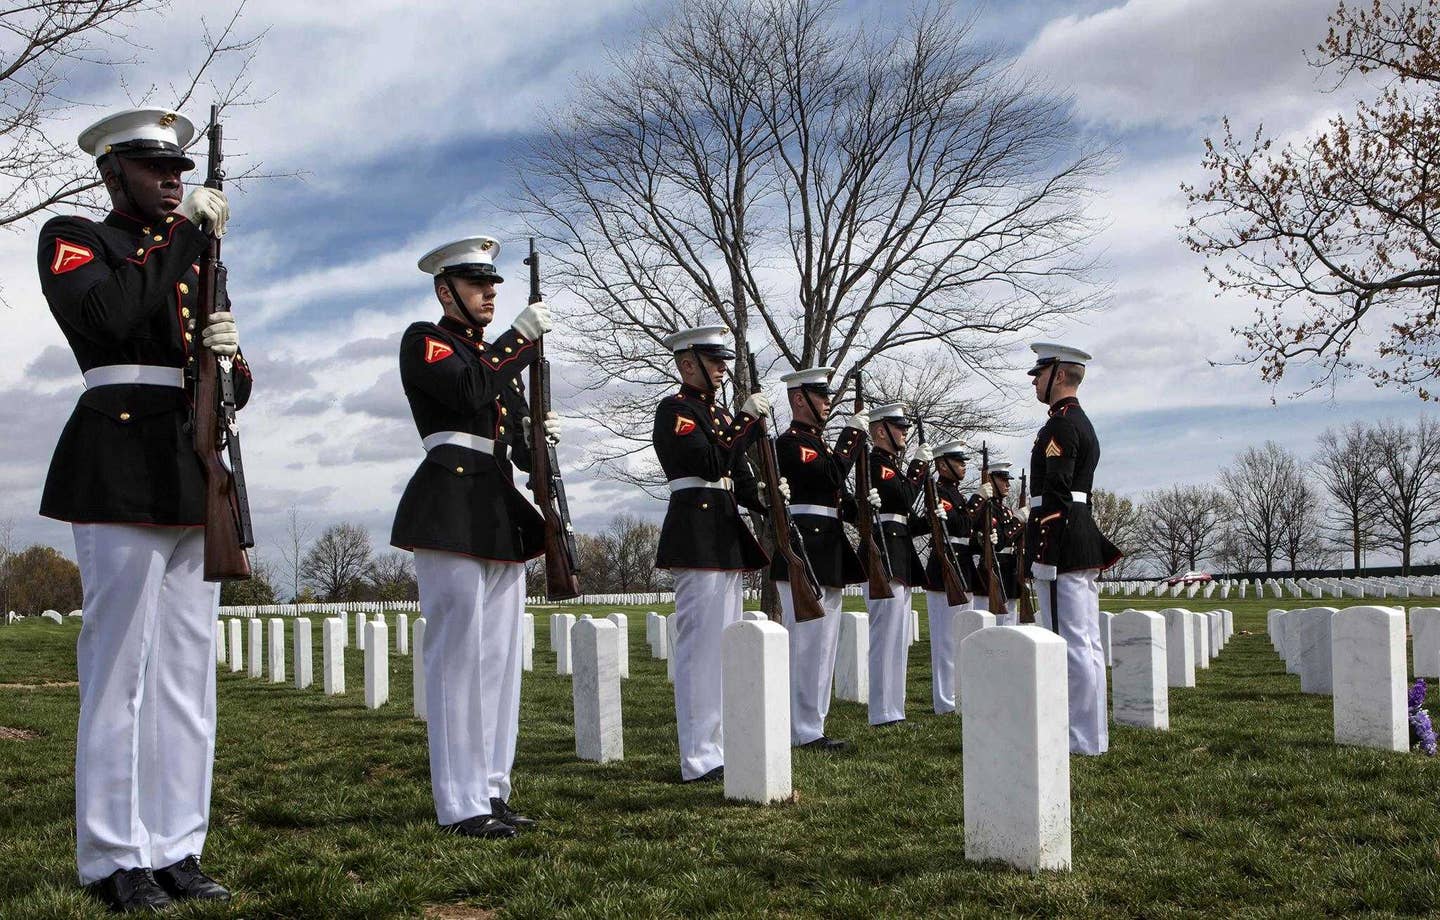 U.S. Marine Corps photo by Lance Cpl. Paul A. Ochoa